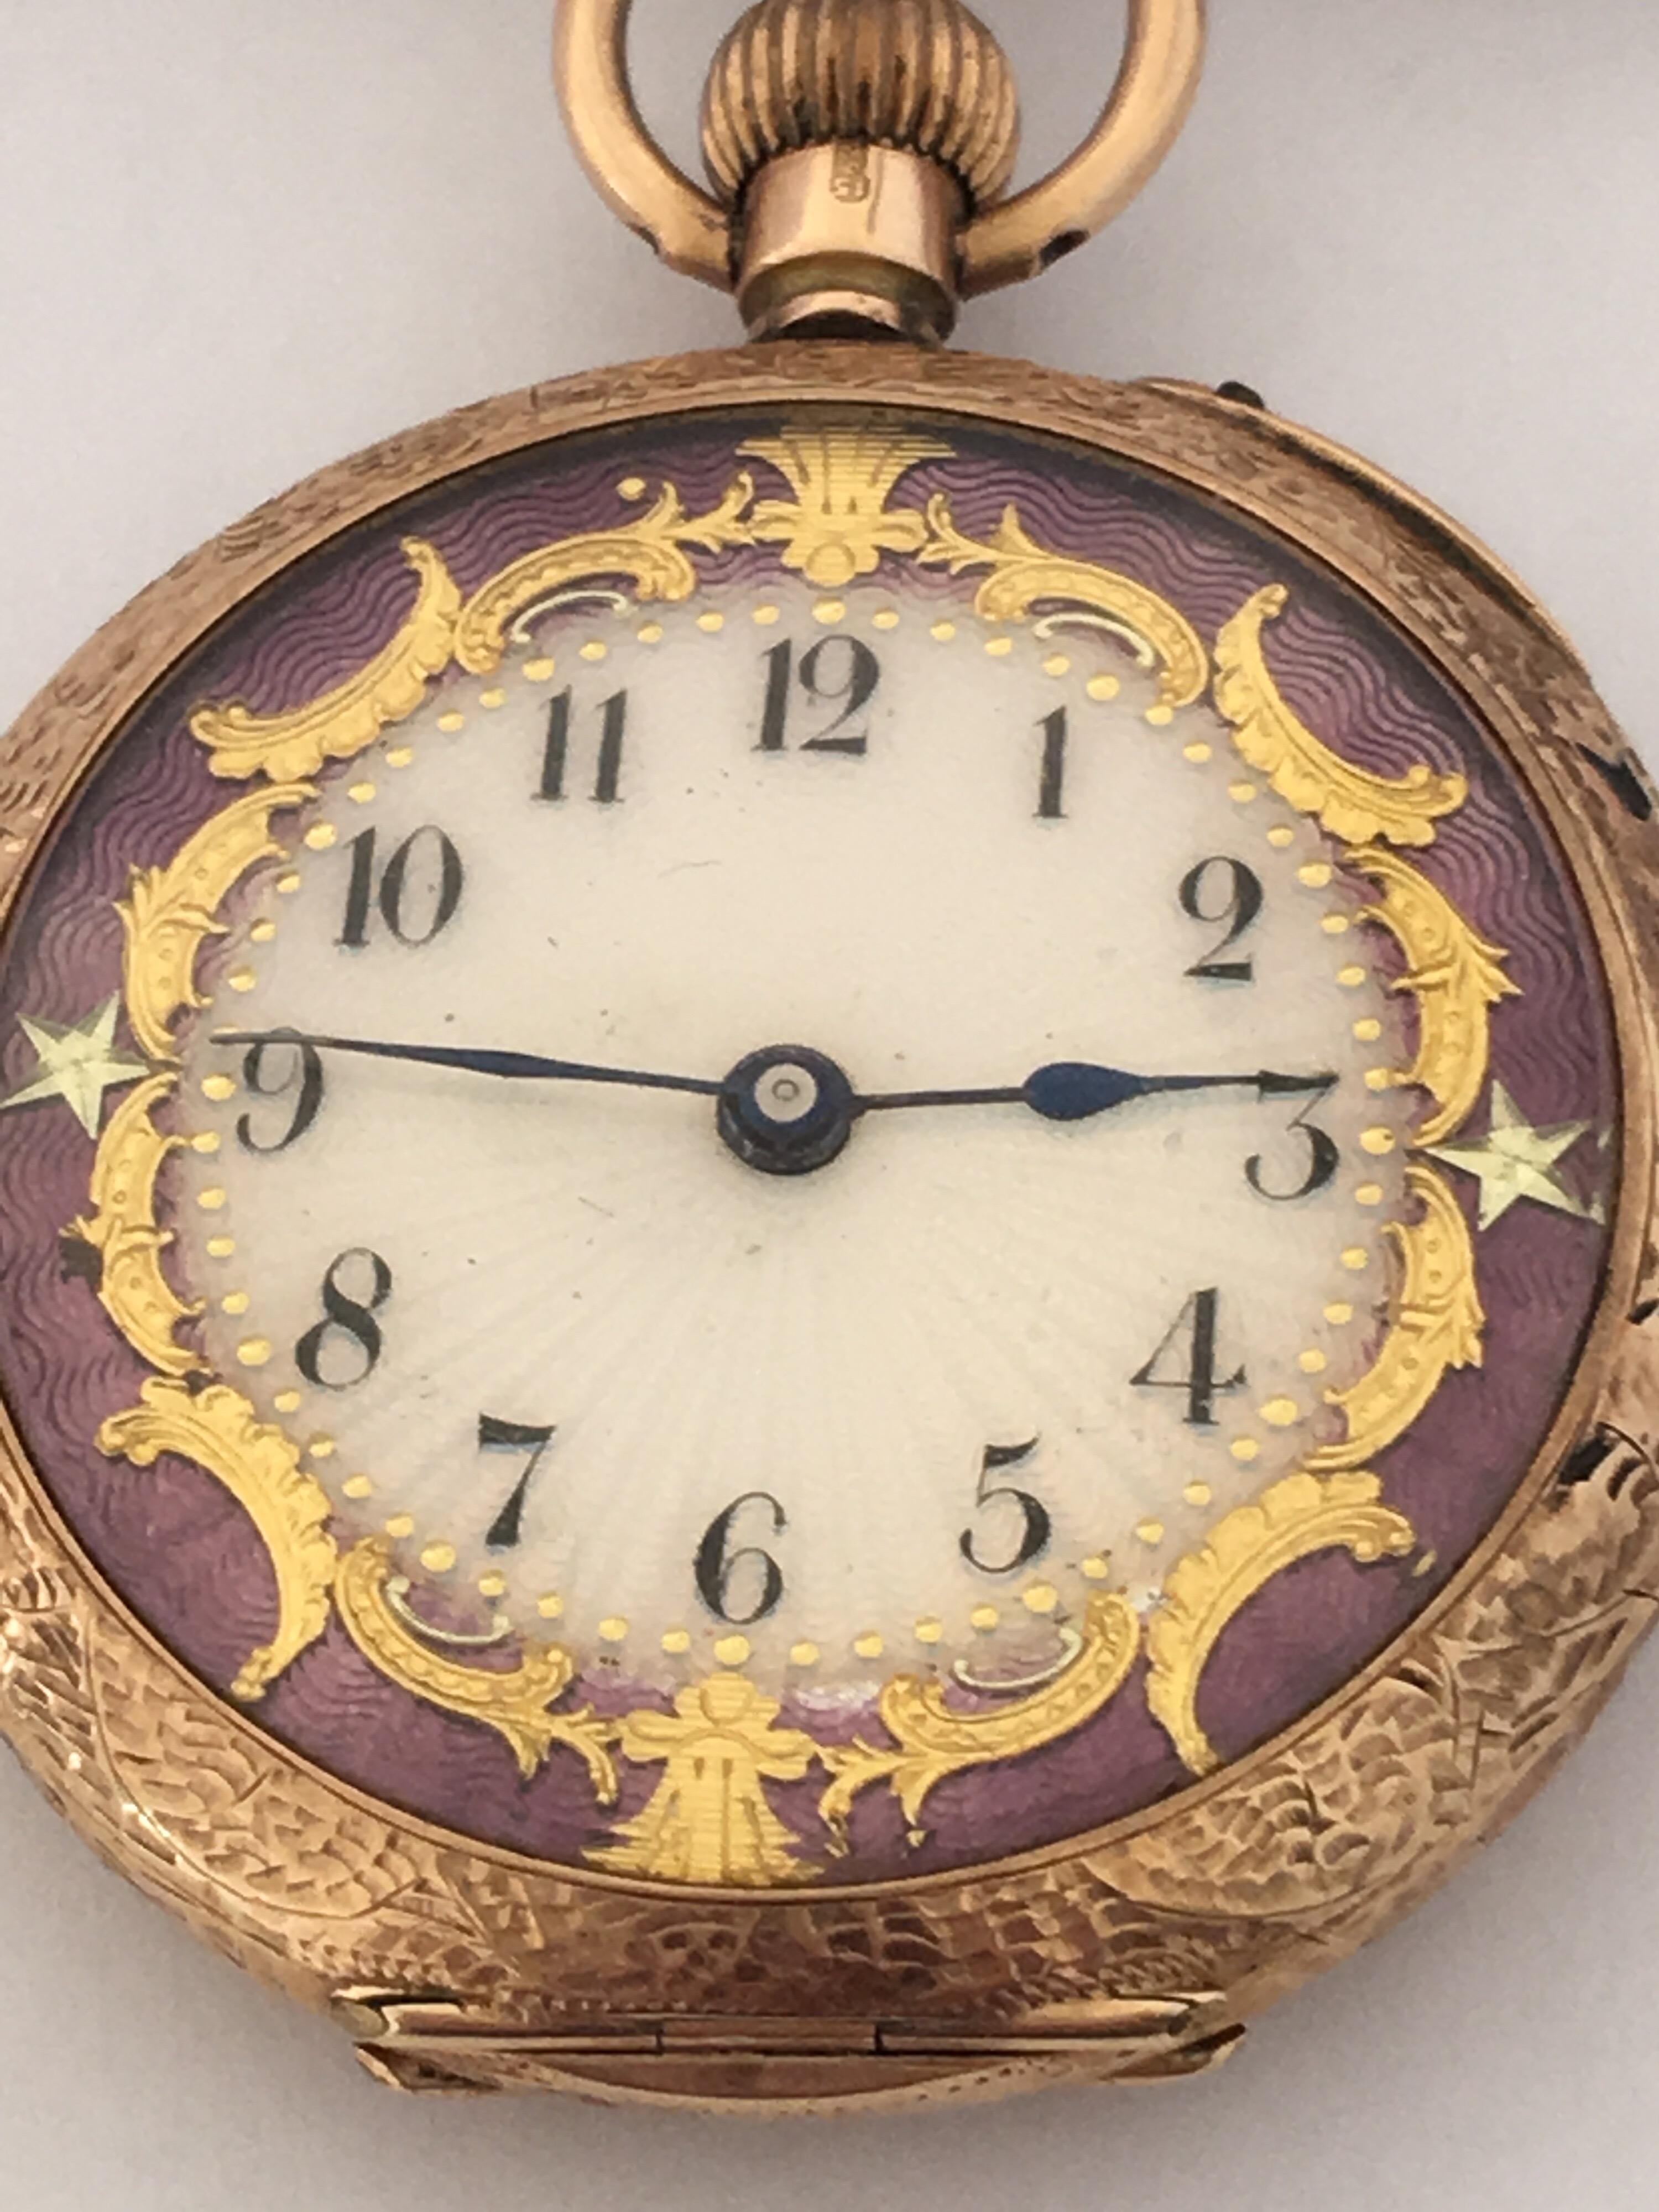 15 Karat Gold Enamel Gold Inlaid Dial Antique Brooch Fob Watch, circa 1890 For Sale 4